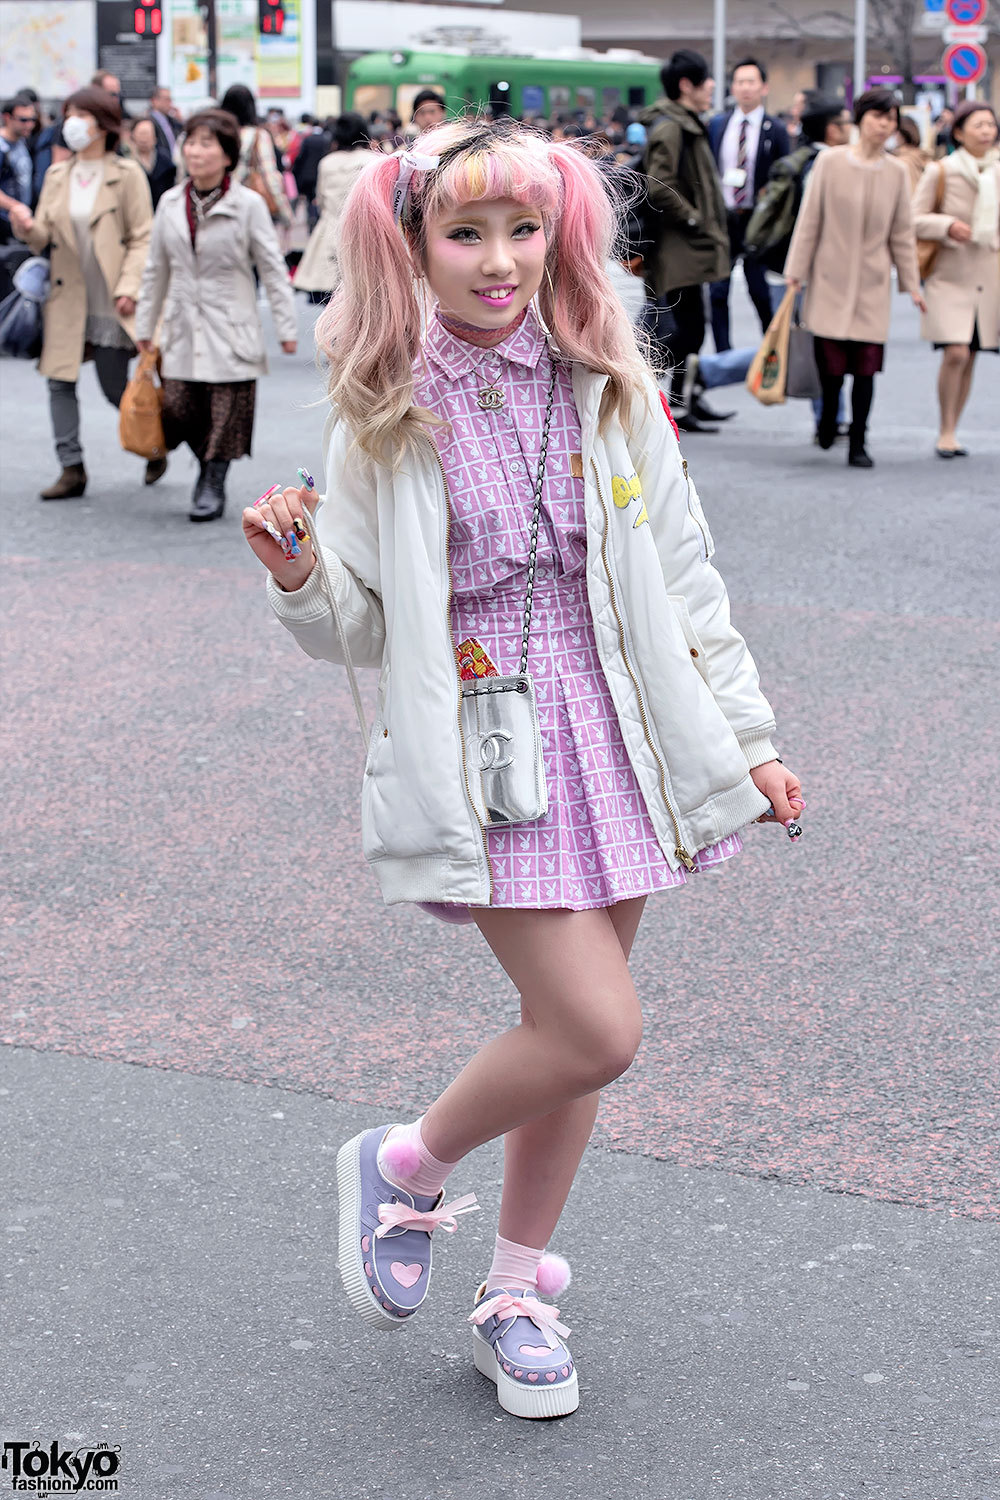 tokyo-fashion:  20-year-old Koyucha at Shibuya Scramble today with a super cute pink